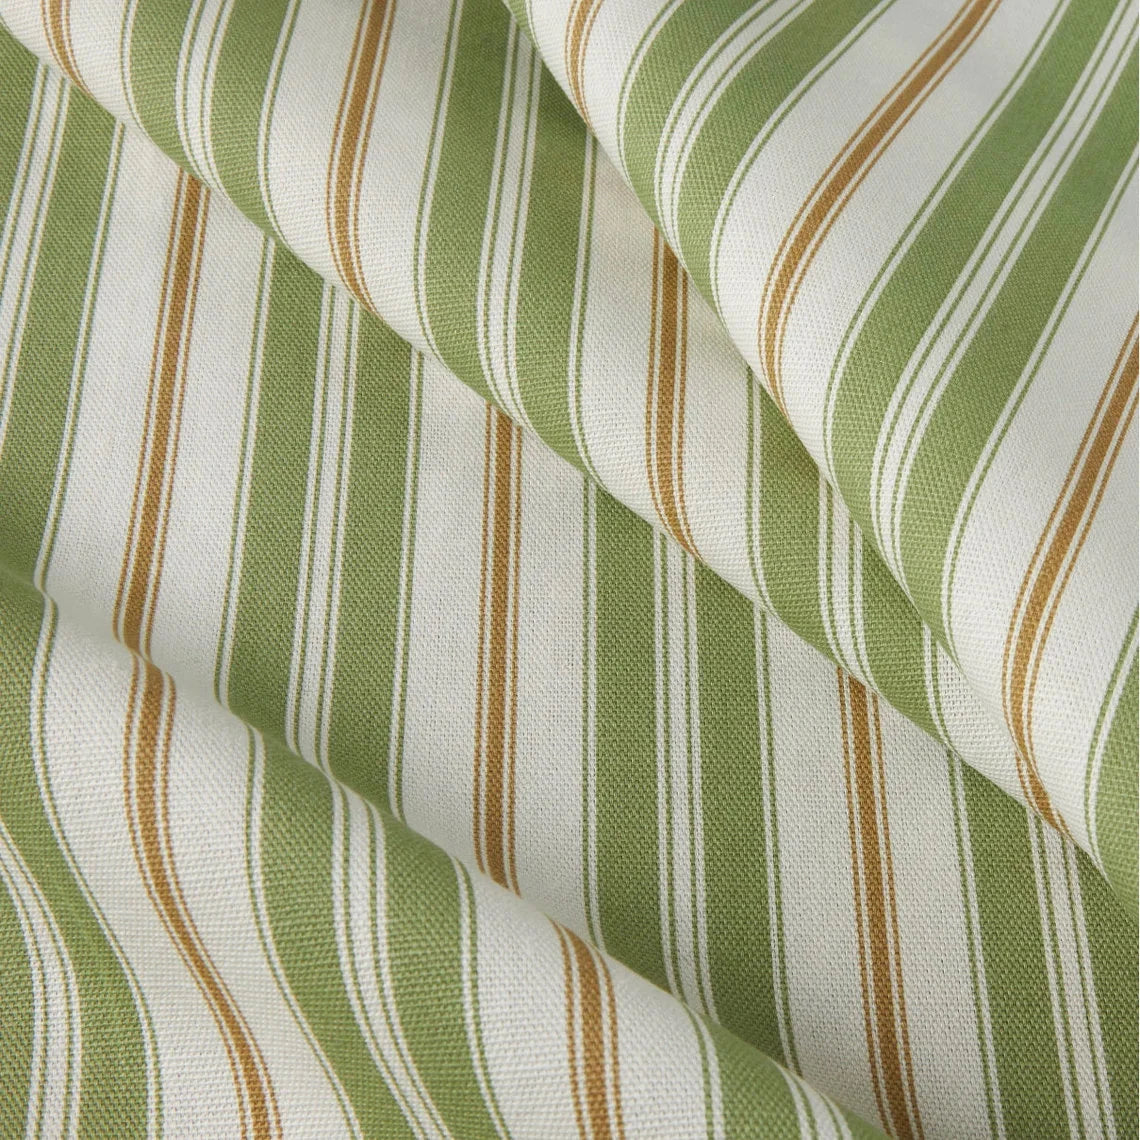 gathered bedskirt in newbury aloe green stripe- green, brown, white